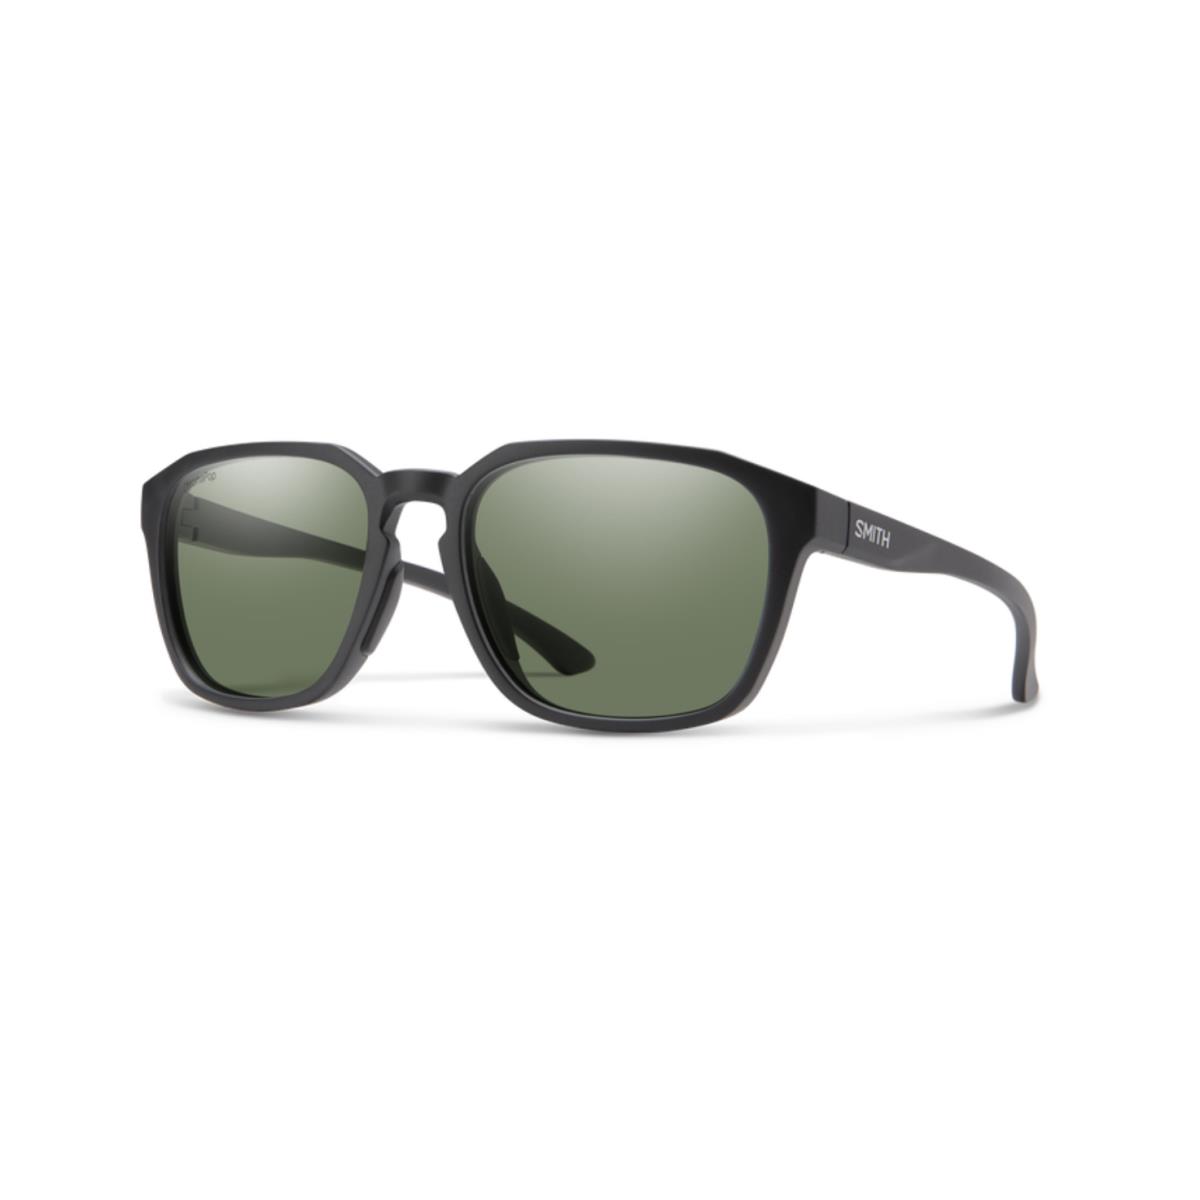 Smith Opitcs Contour Sunglasses Matte Black Chromapop Polarized Gray Green